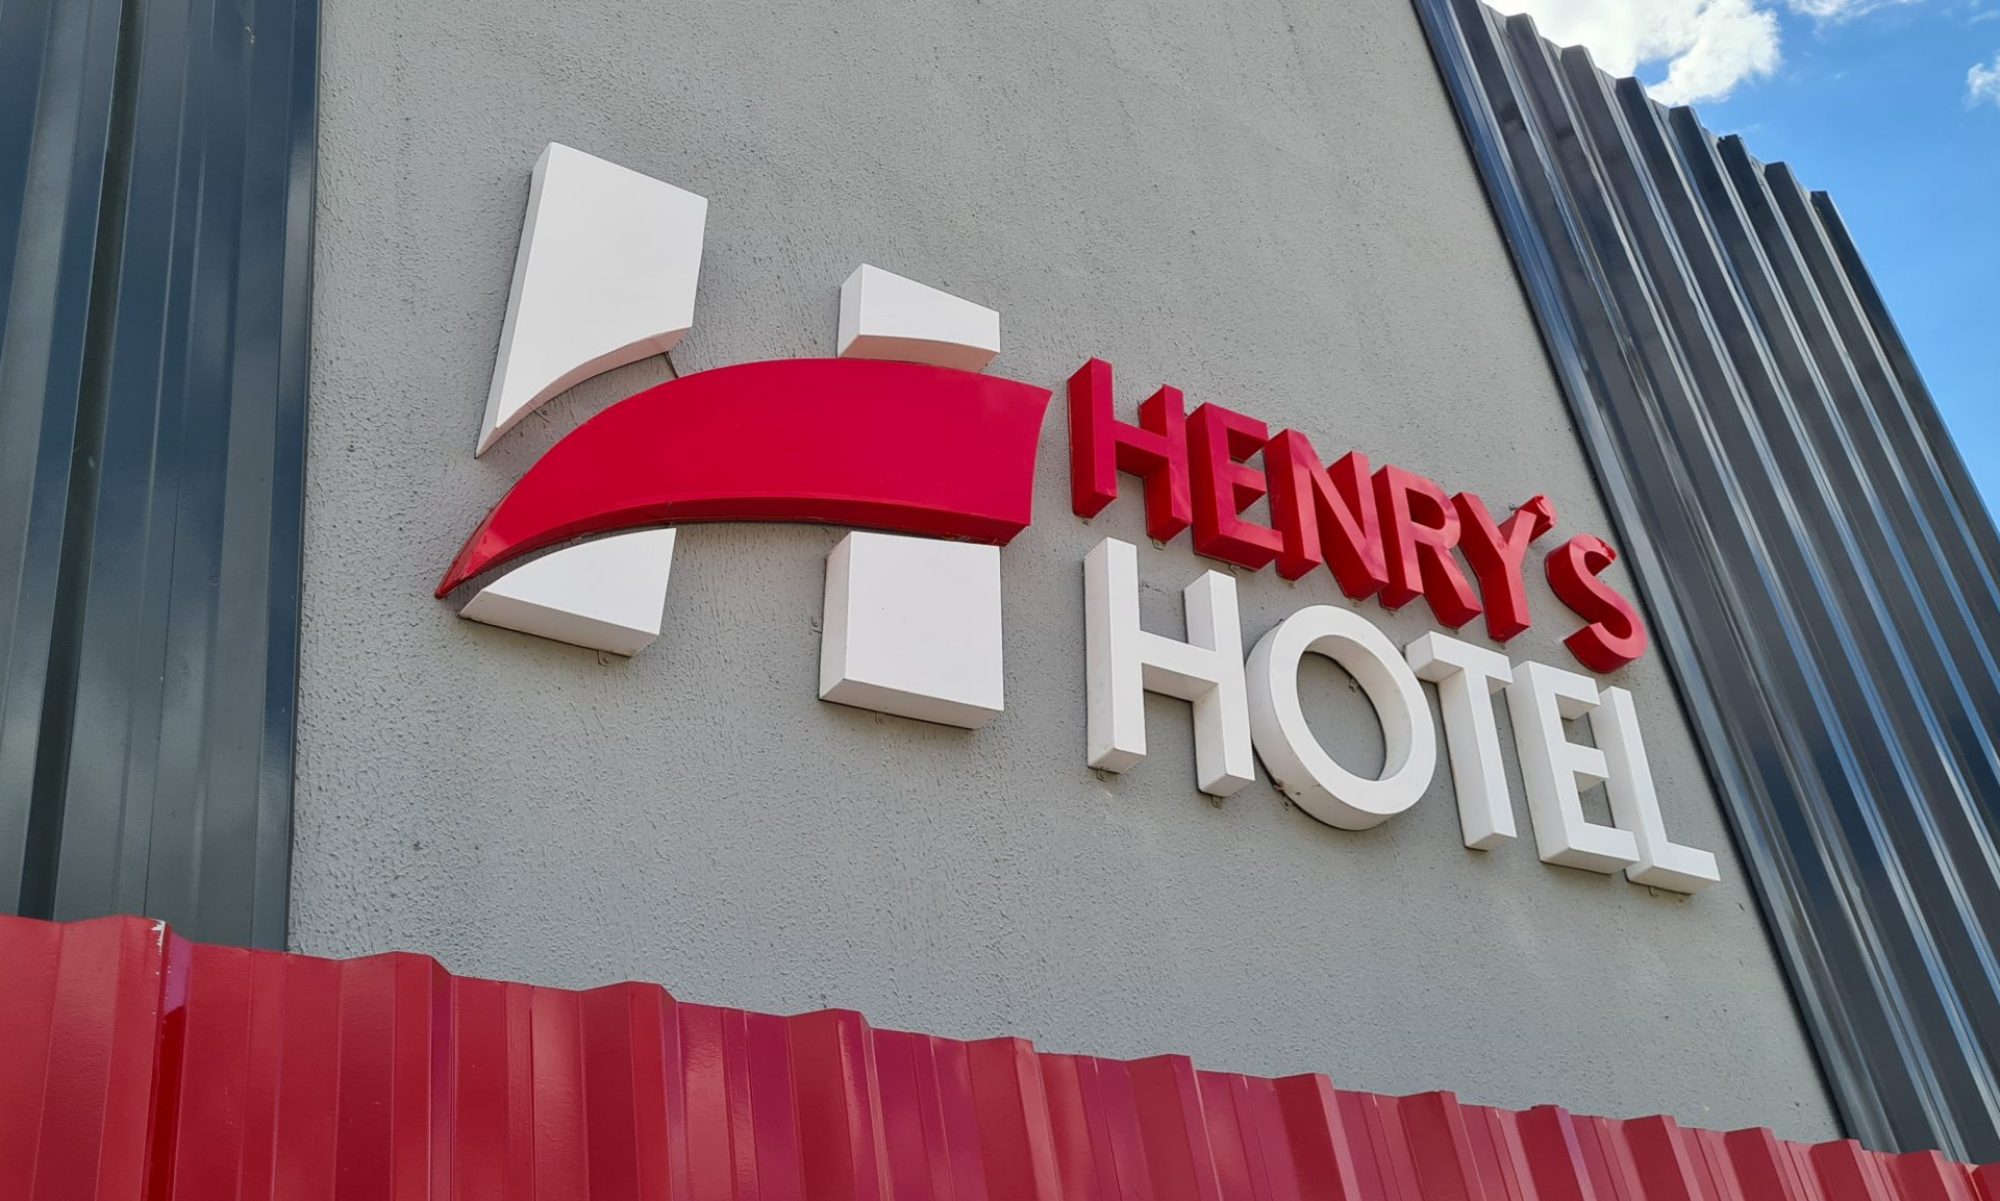 Henry's Hotel